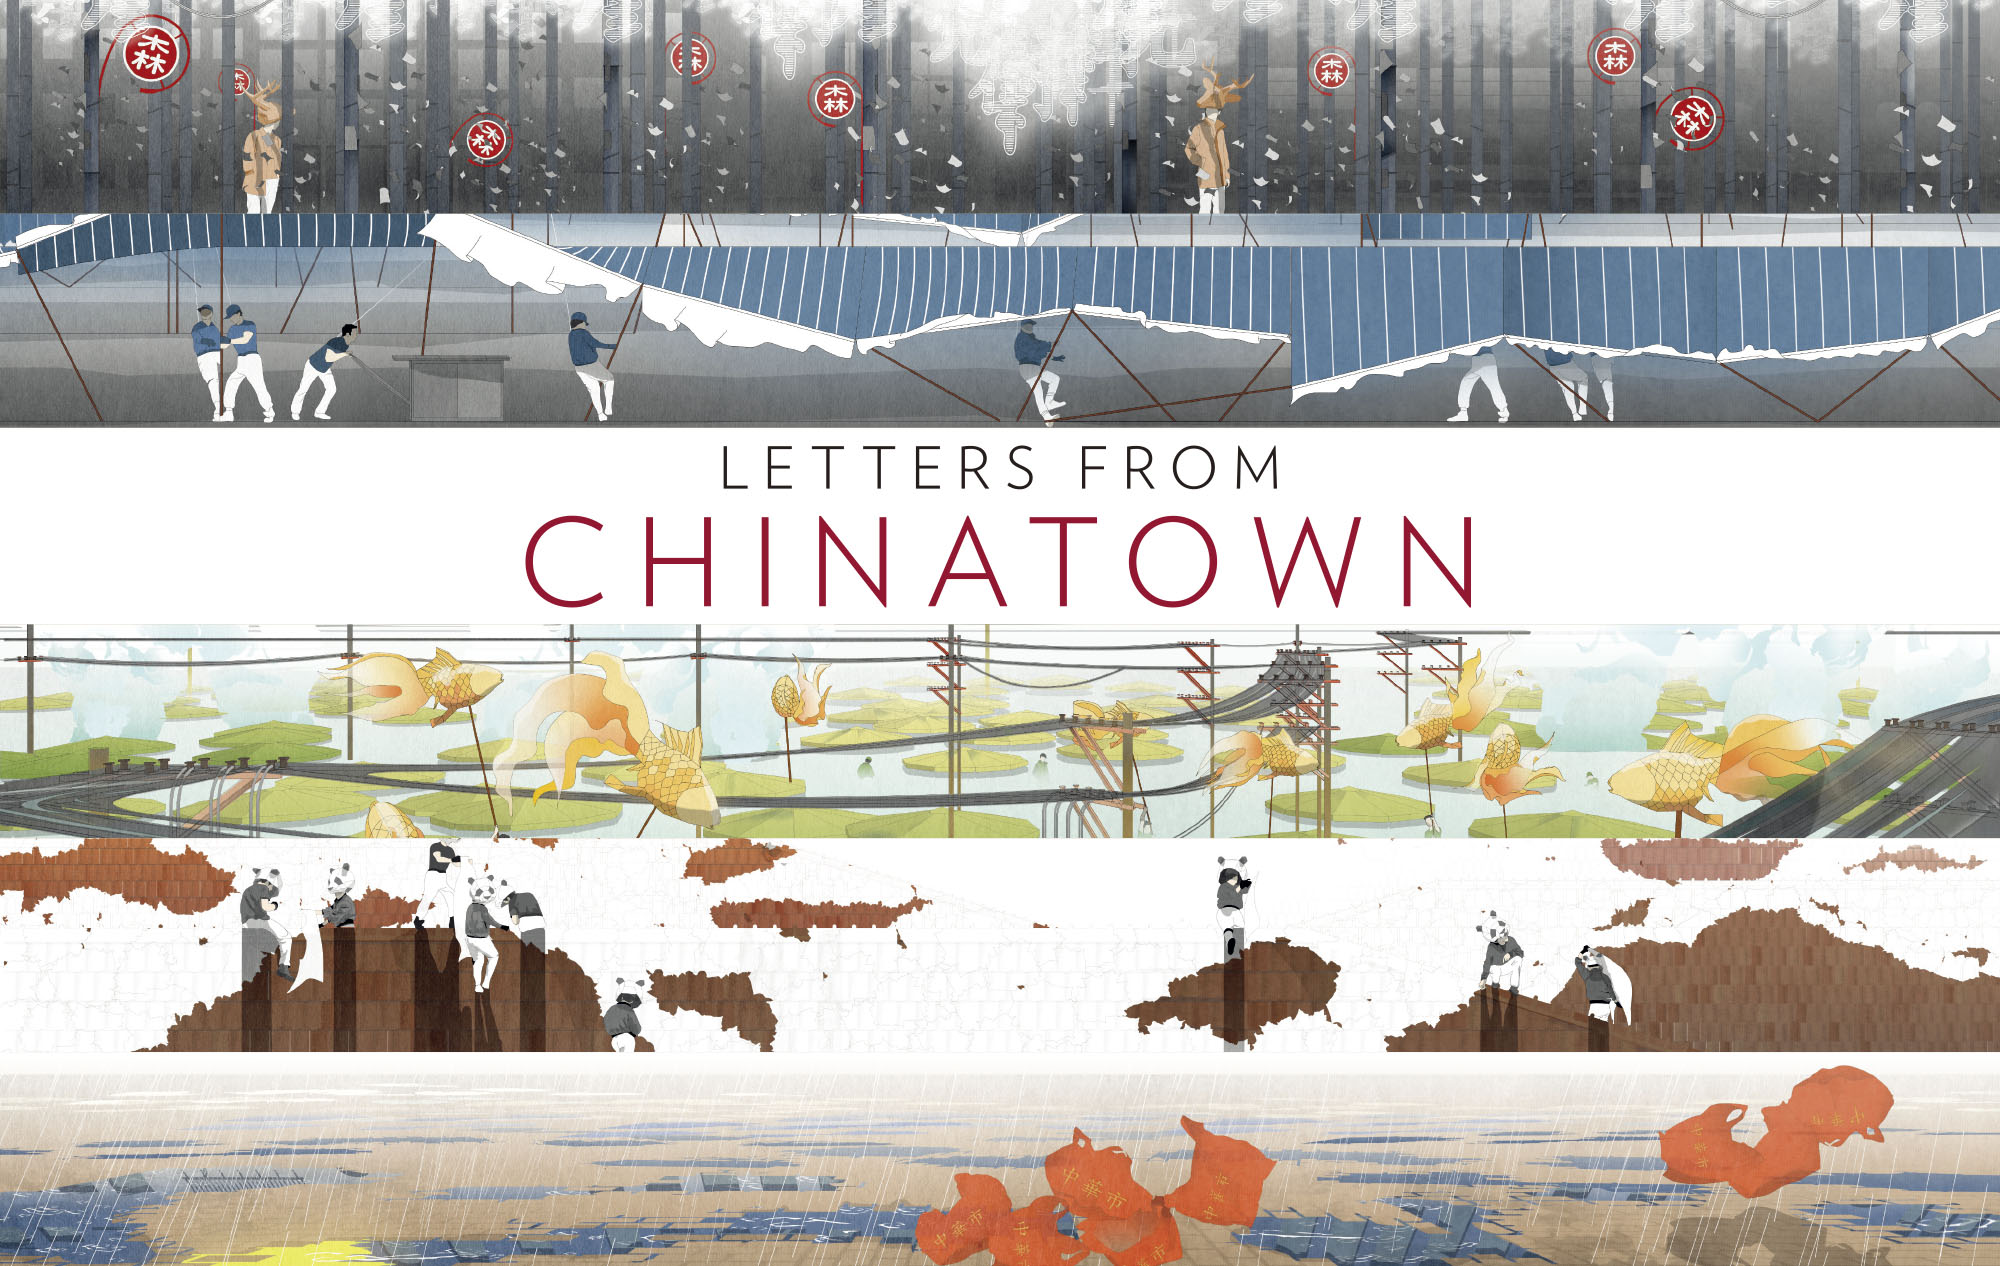 Chinatown illustration